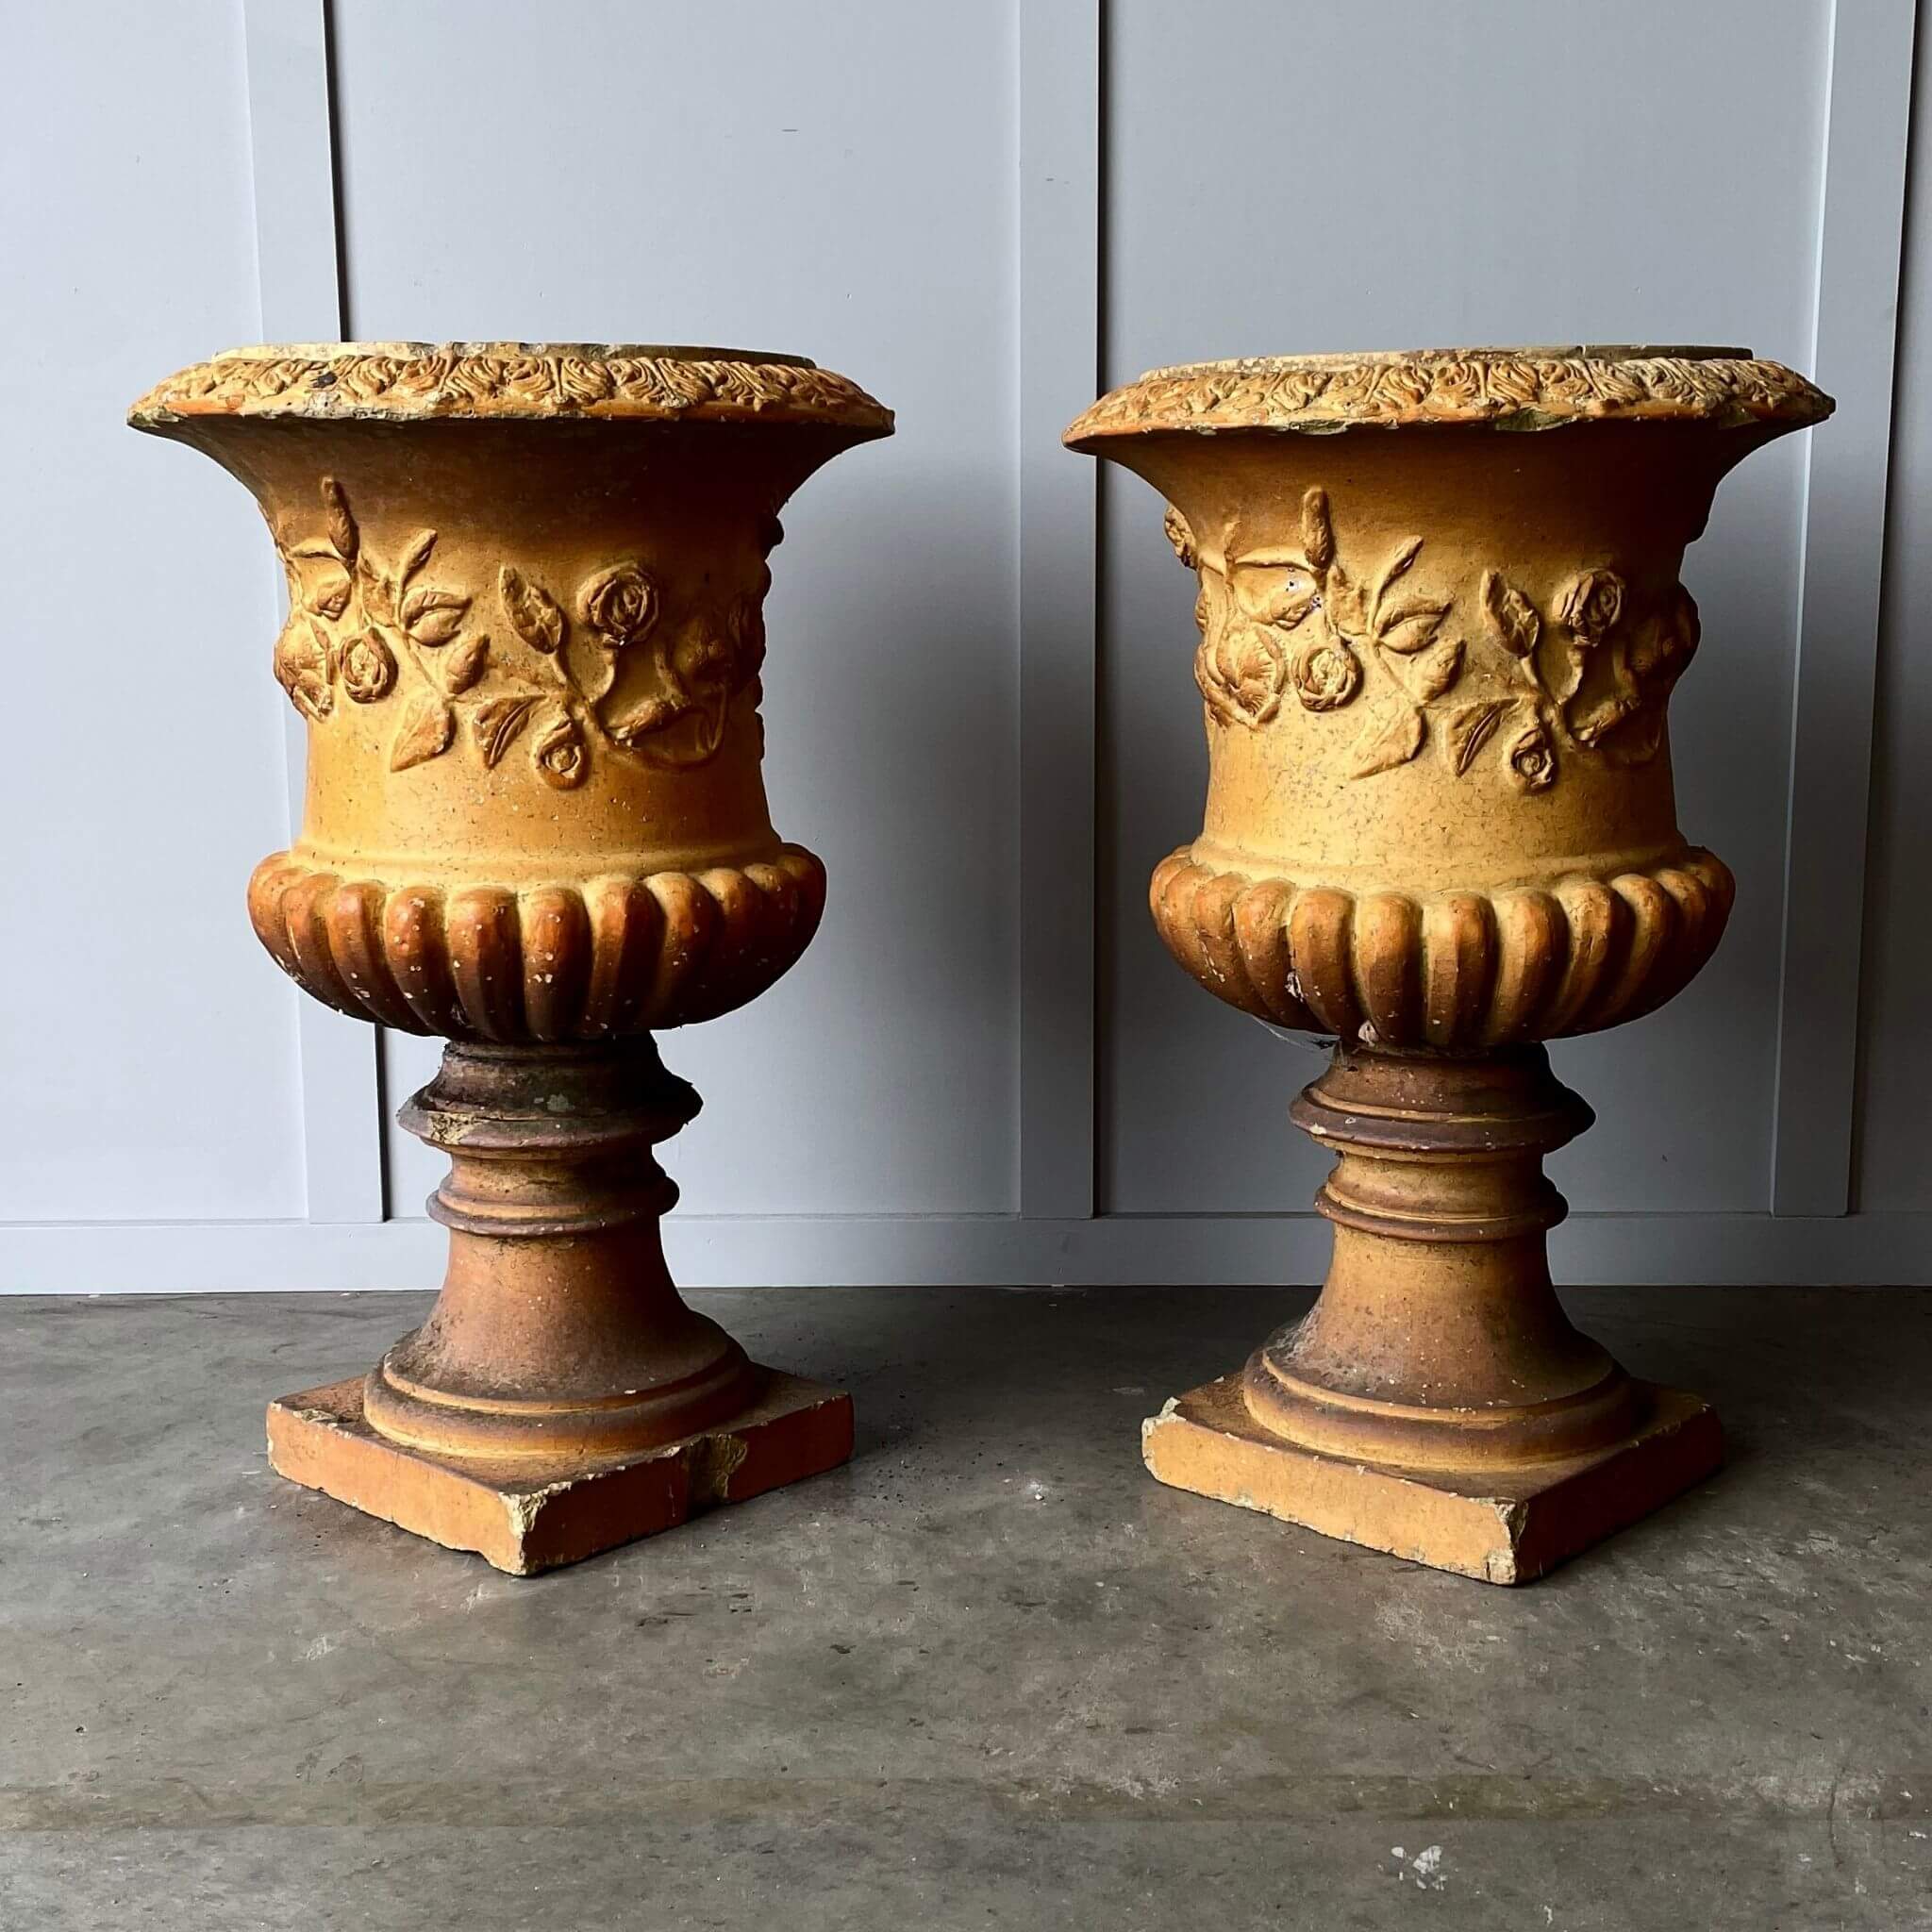 Vintage New Zealand Pottery Urns